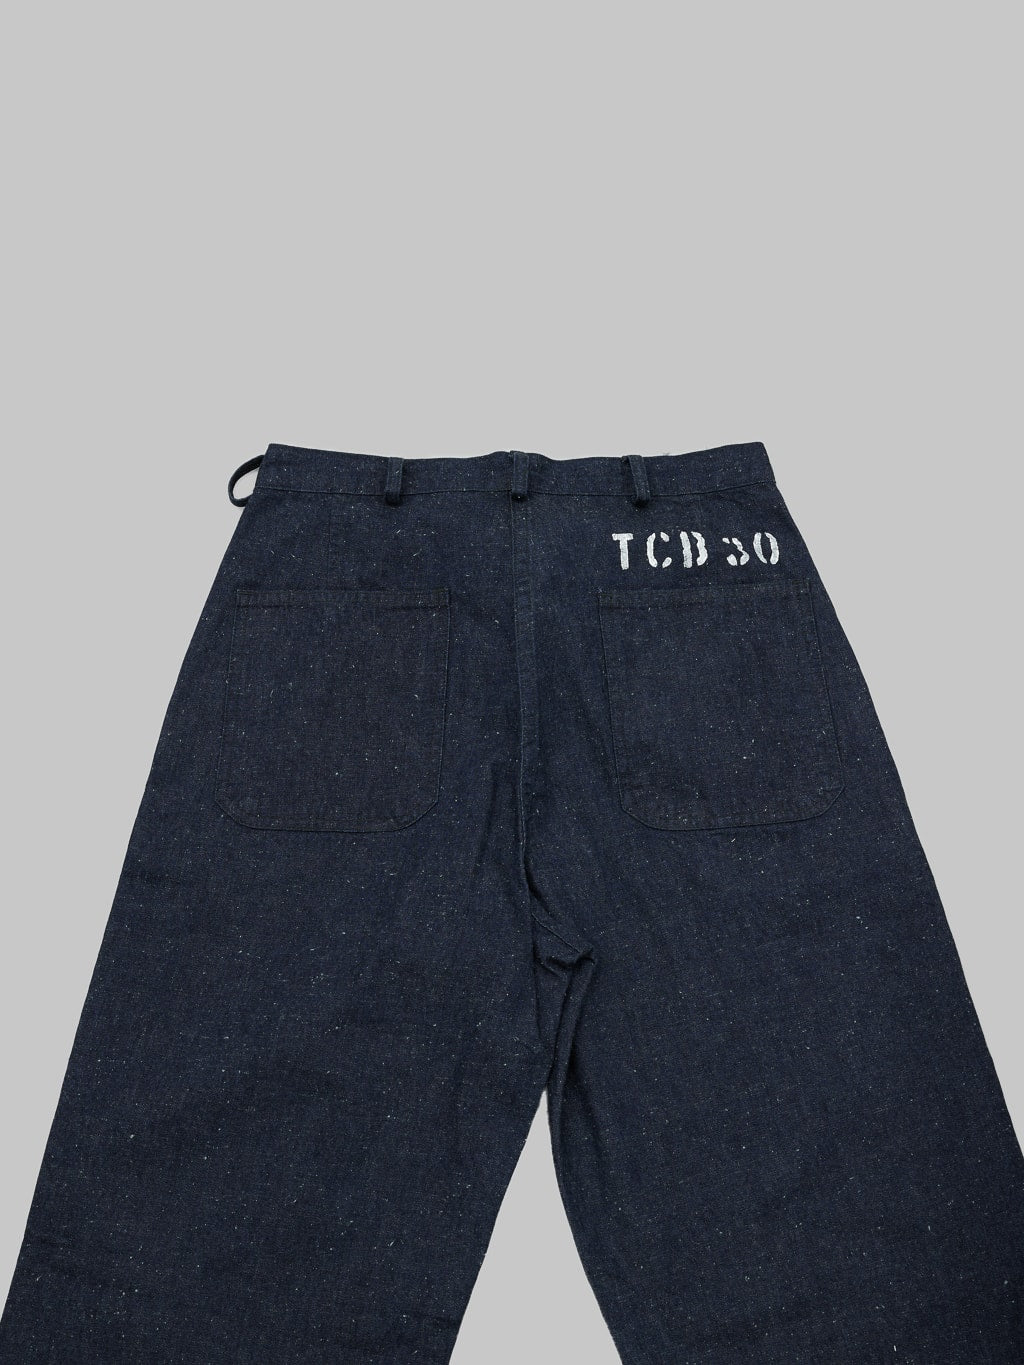 tcb jeans usn seamens denim trousers  back